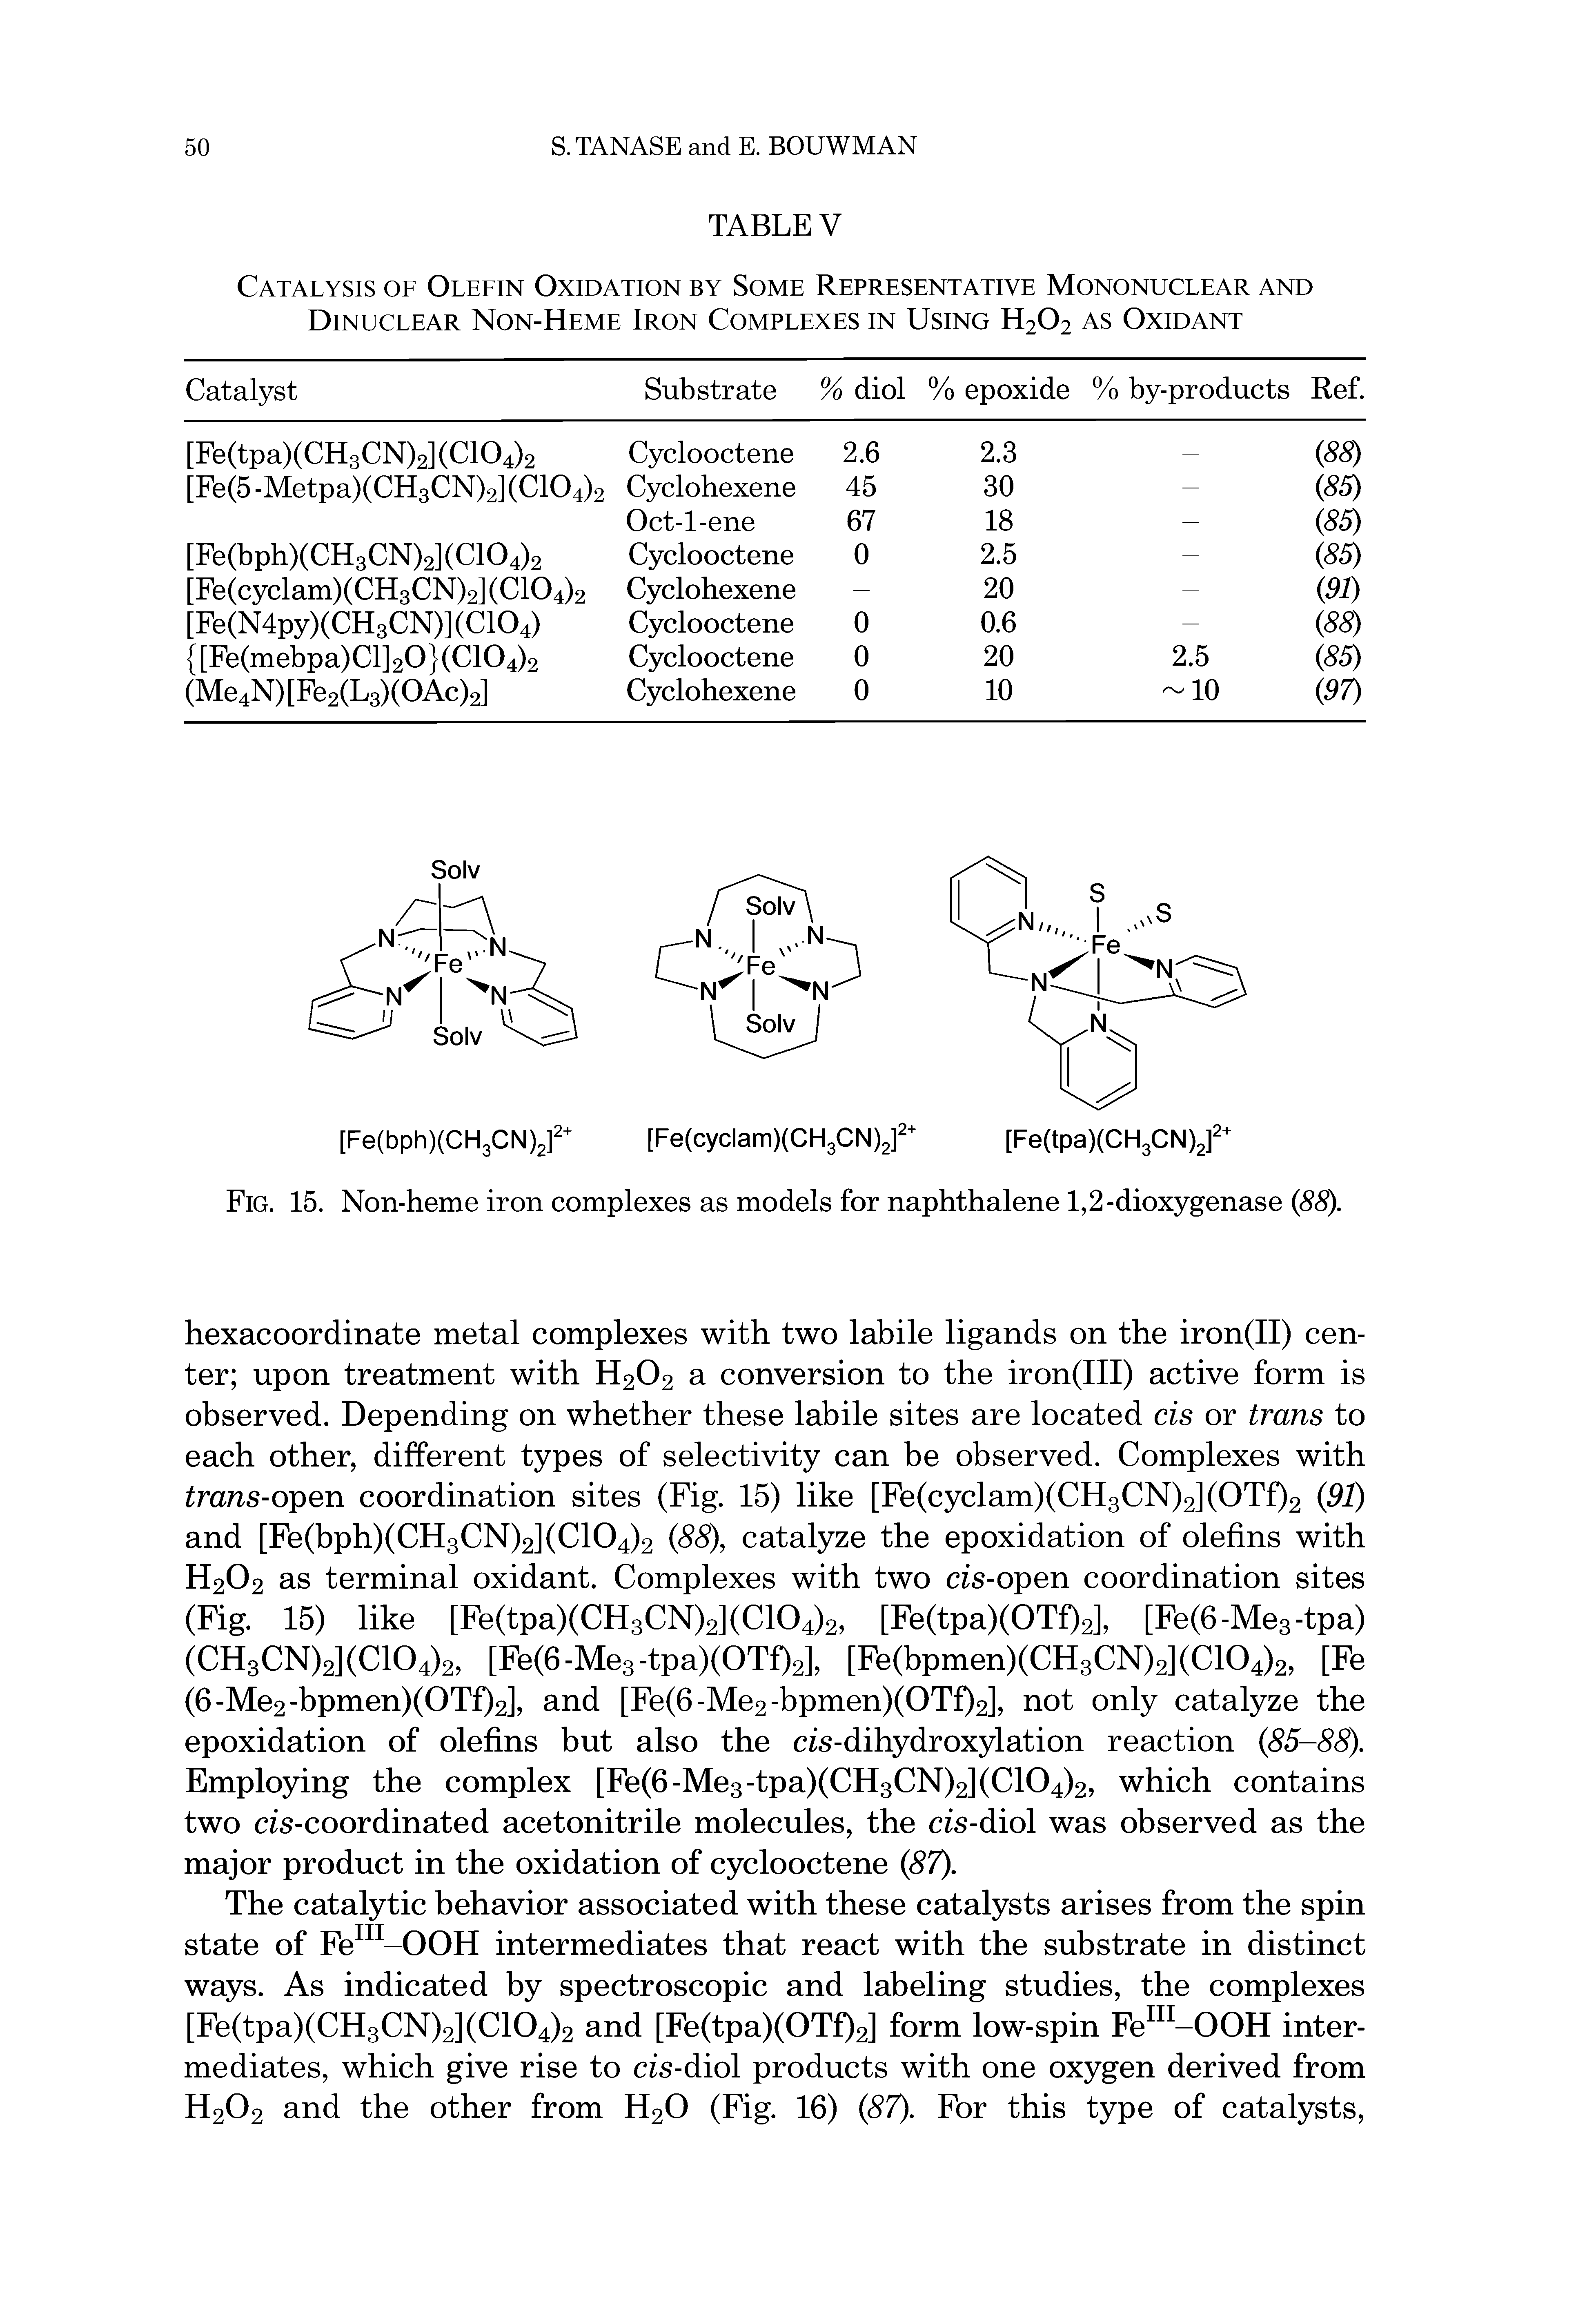 Fig. 15. Non-heme iron complexes as models for naphthalene 1,2-dioxygenase (88).